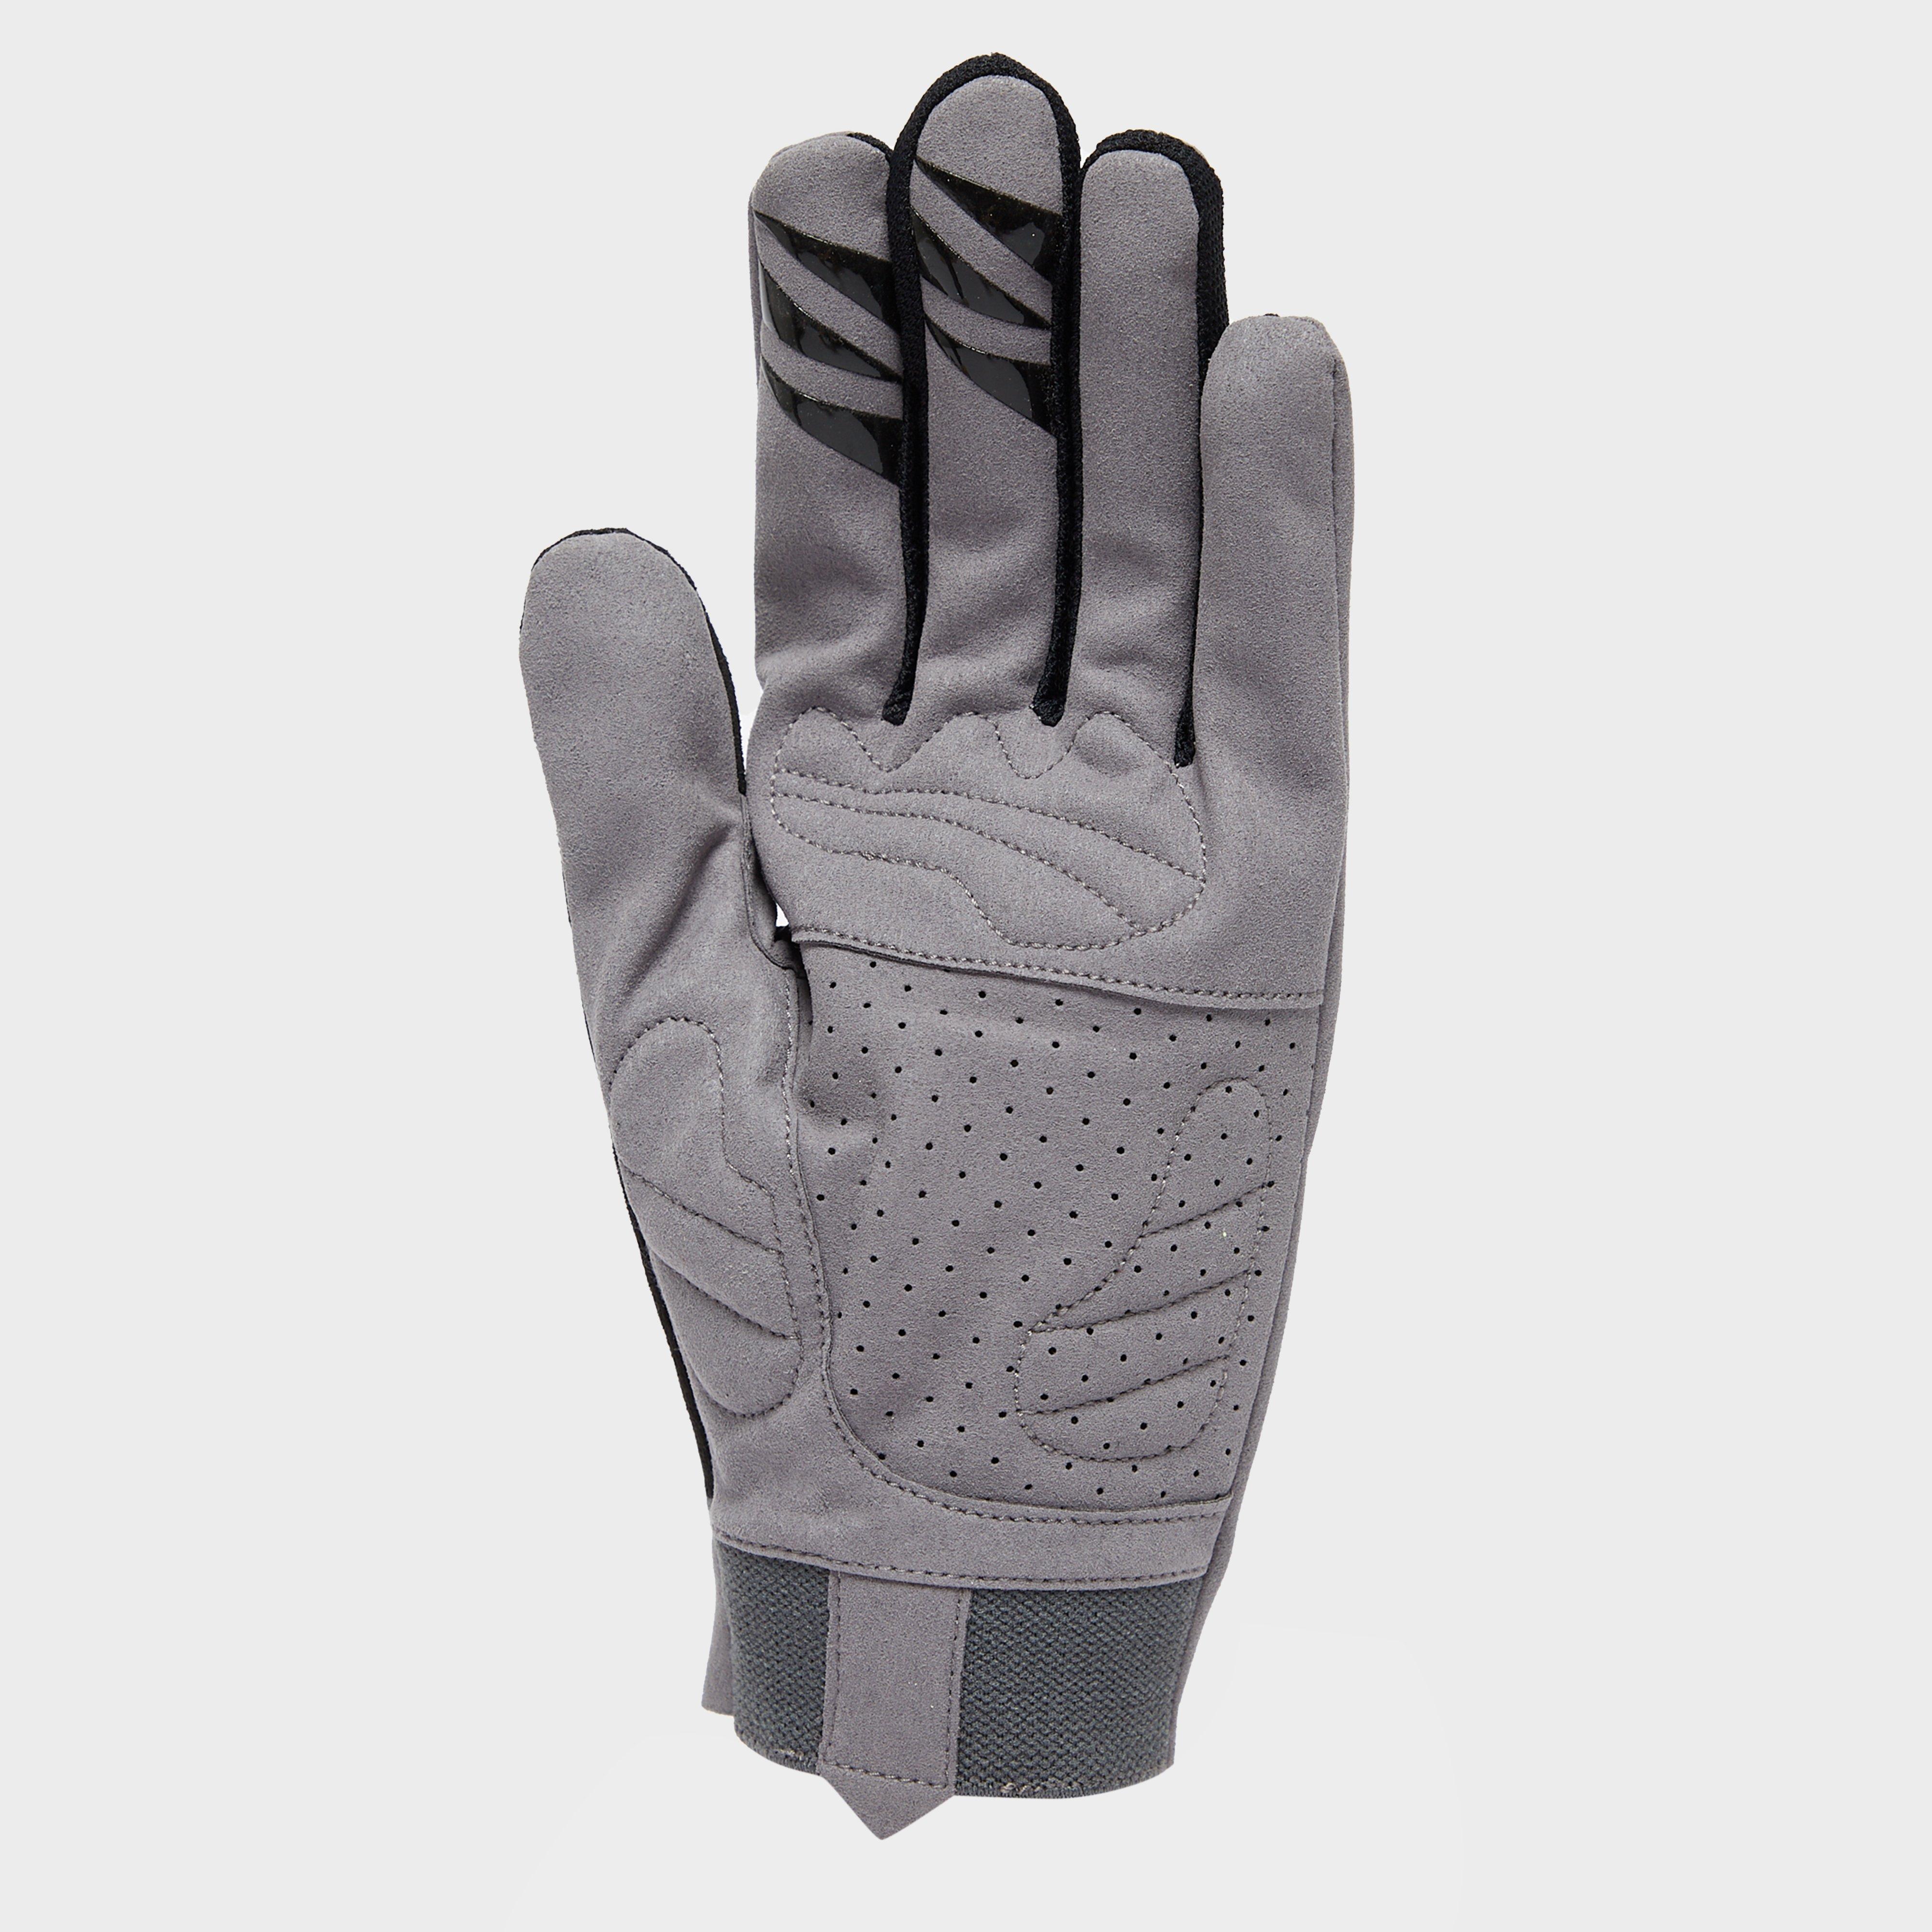 Sealskinz Solo MTB Glove Review